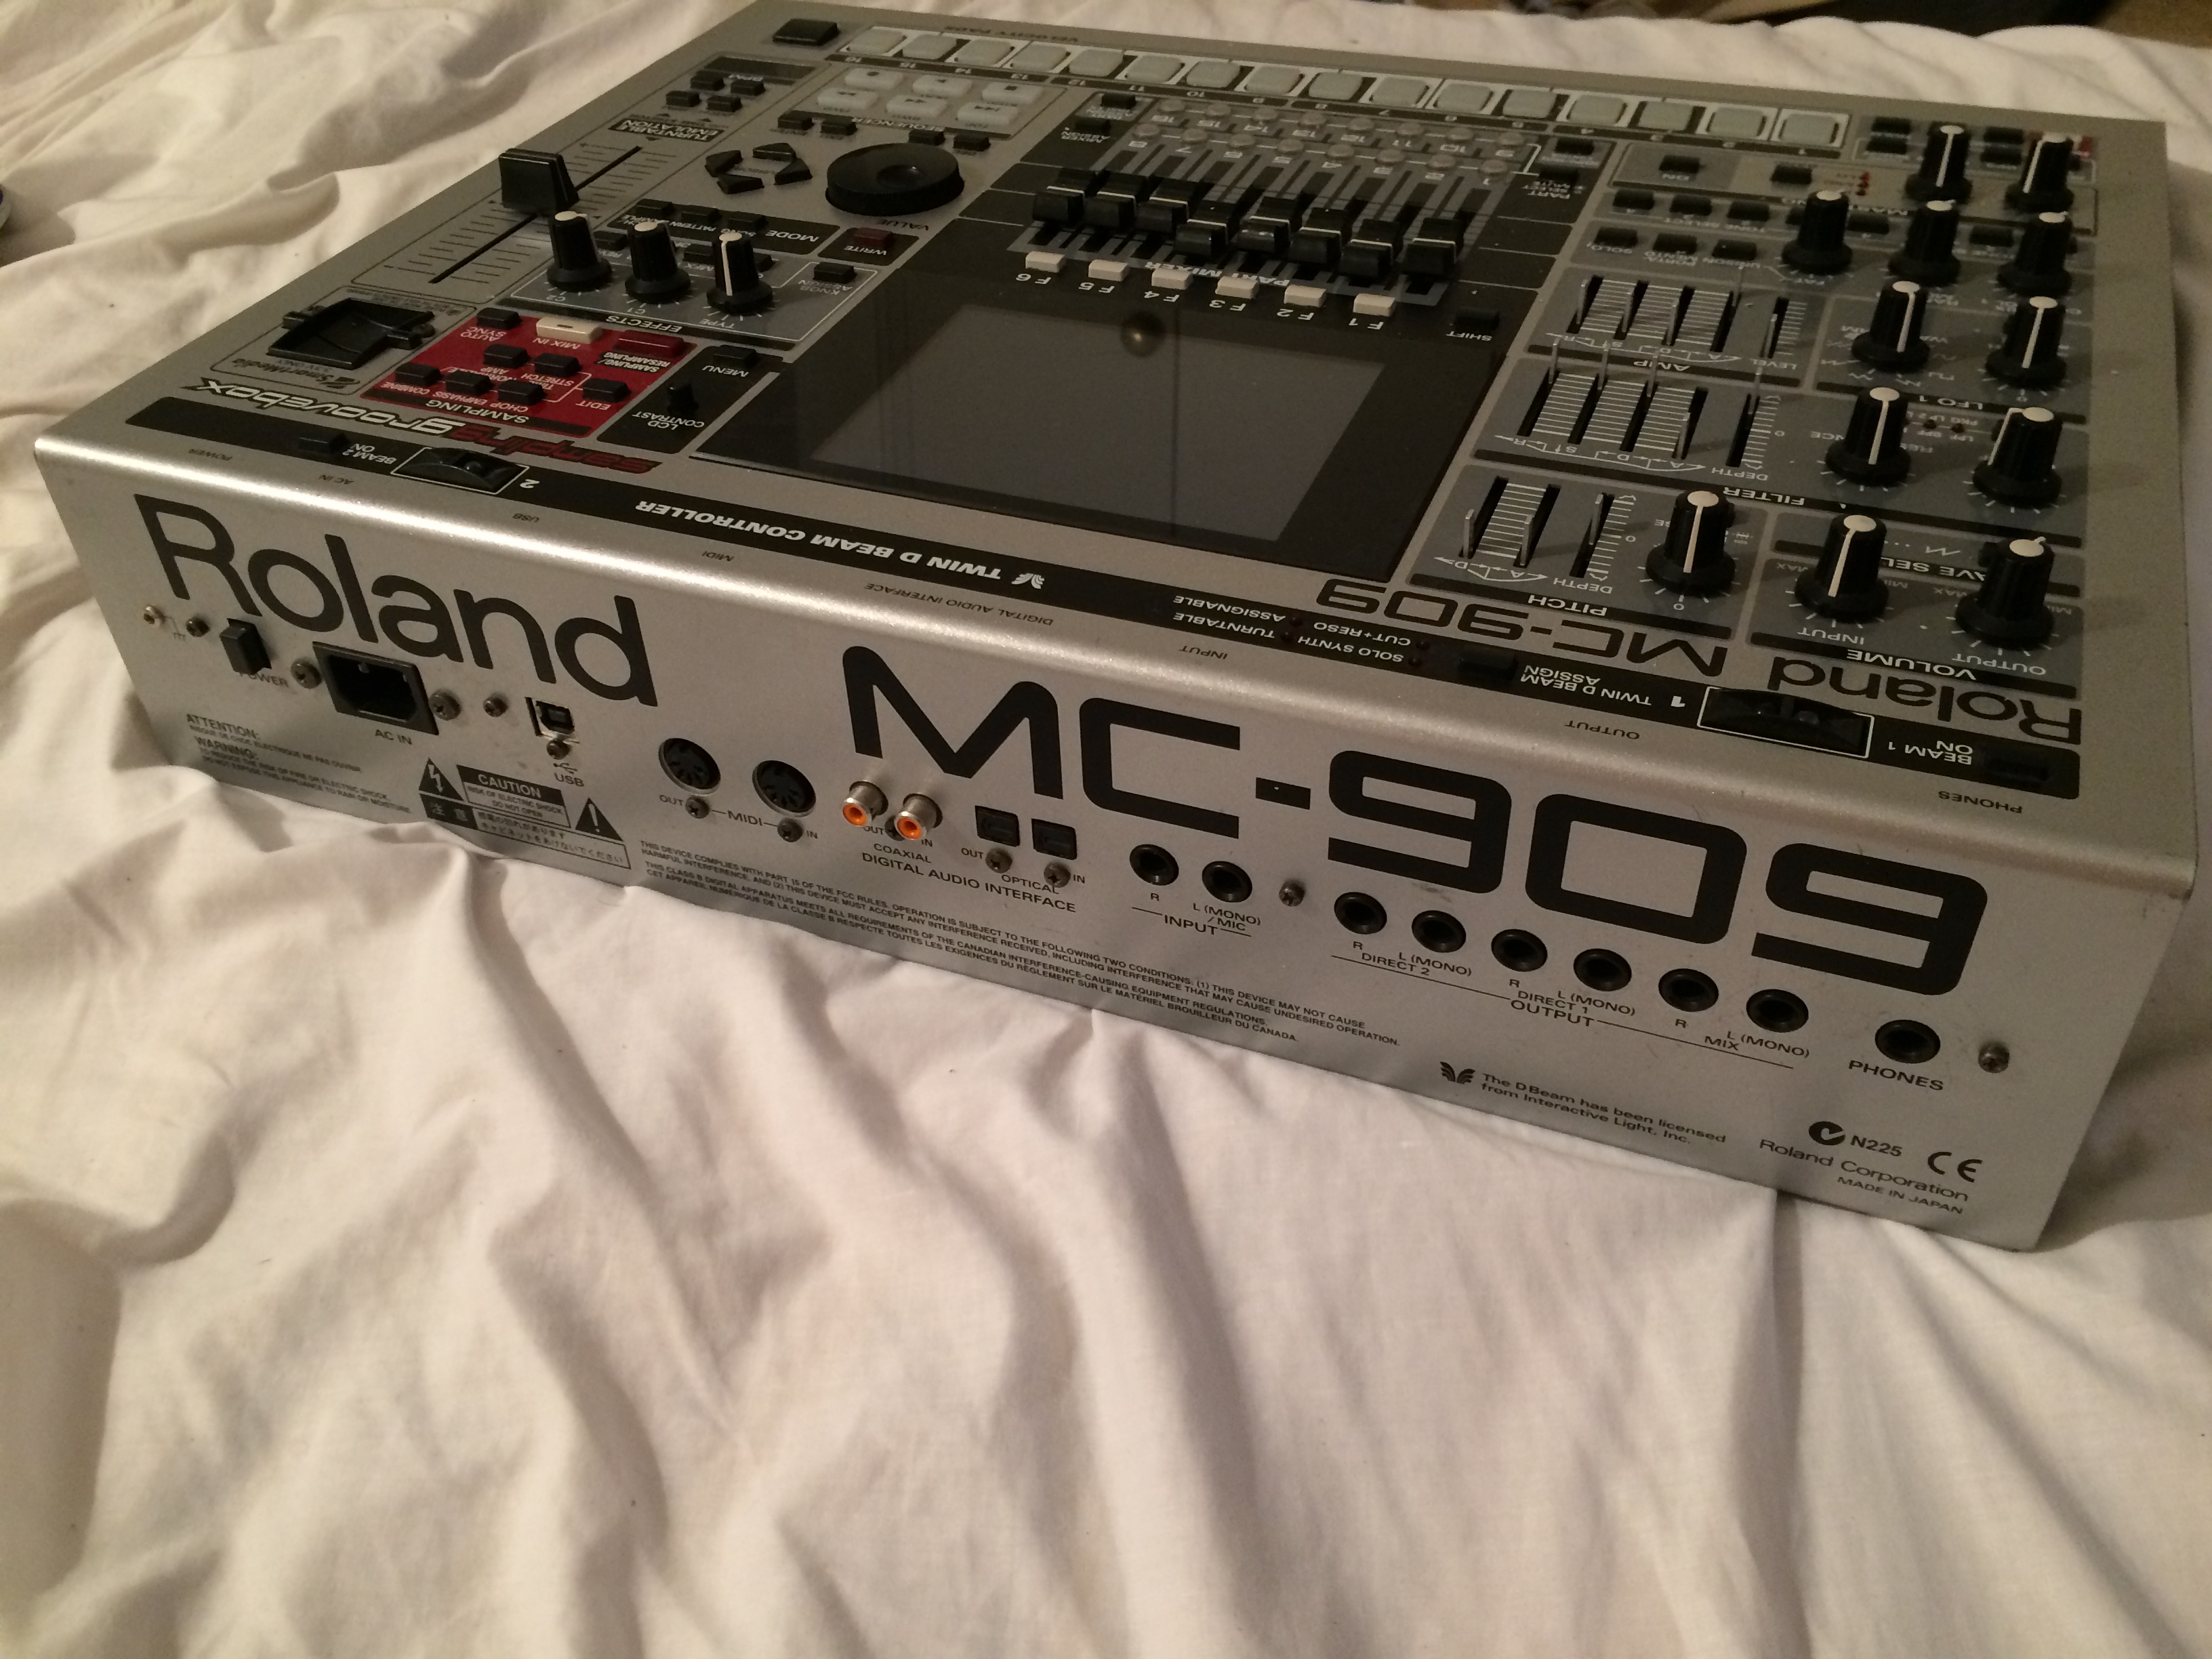 Roland MC-909 Sampling Groovebox image (#1815301) - Audiofanzine